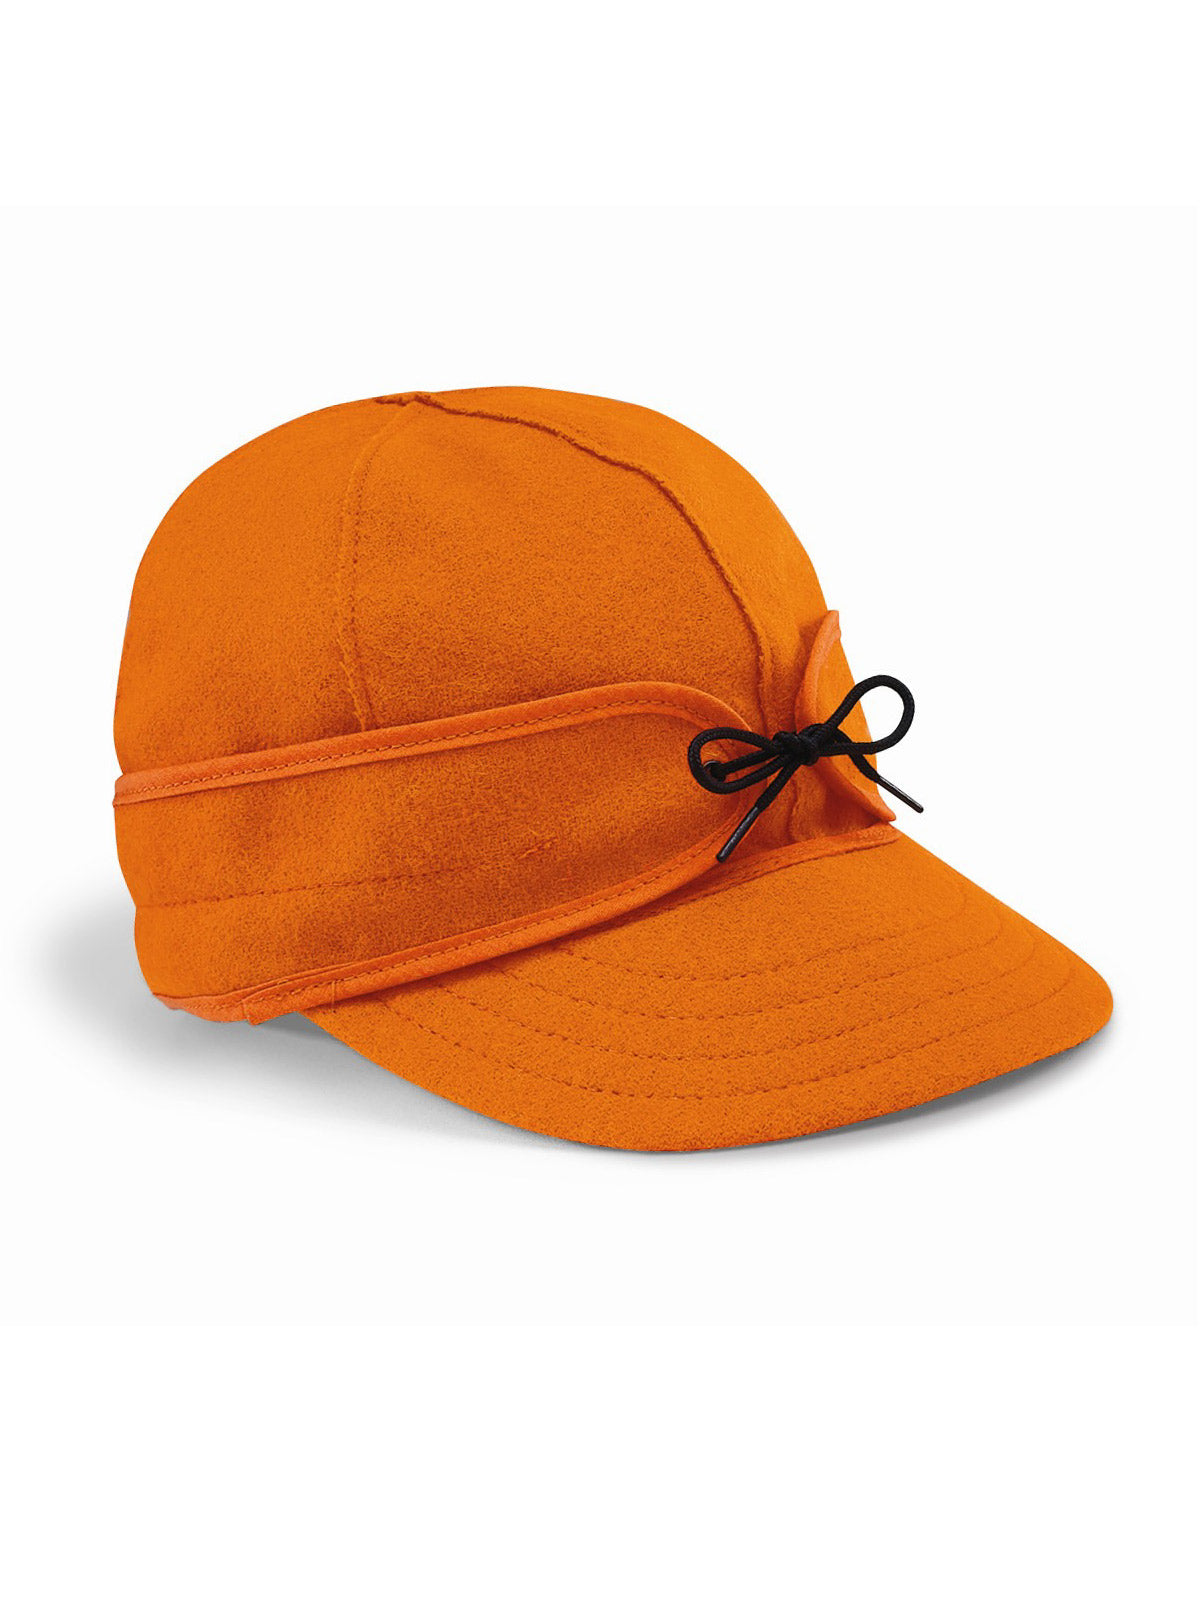 Origional Stormy Kromer Caps With Ear Band in Orange - 50010-ORA